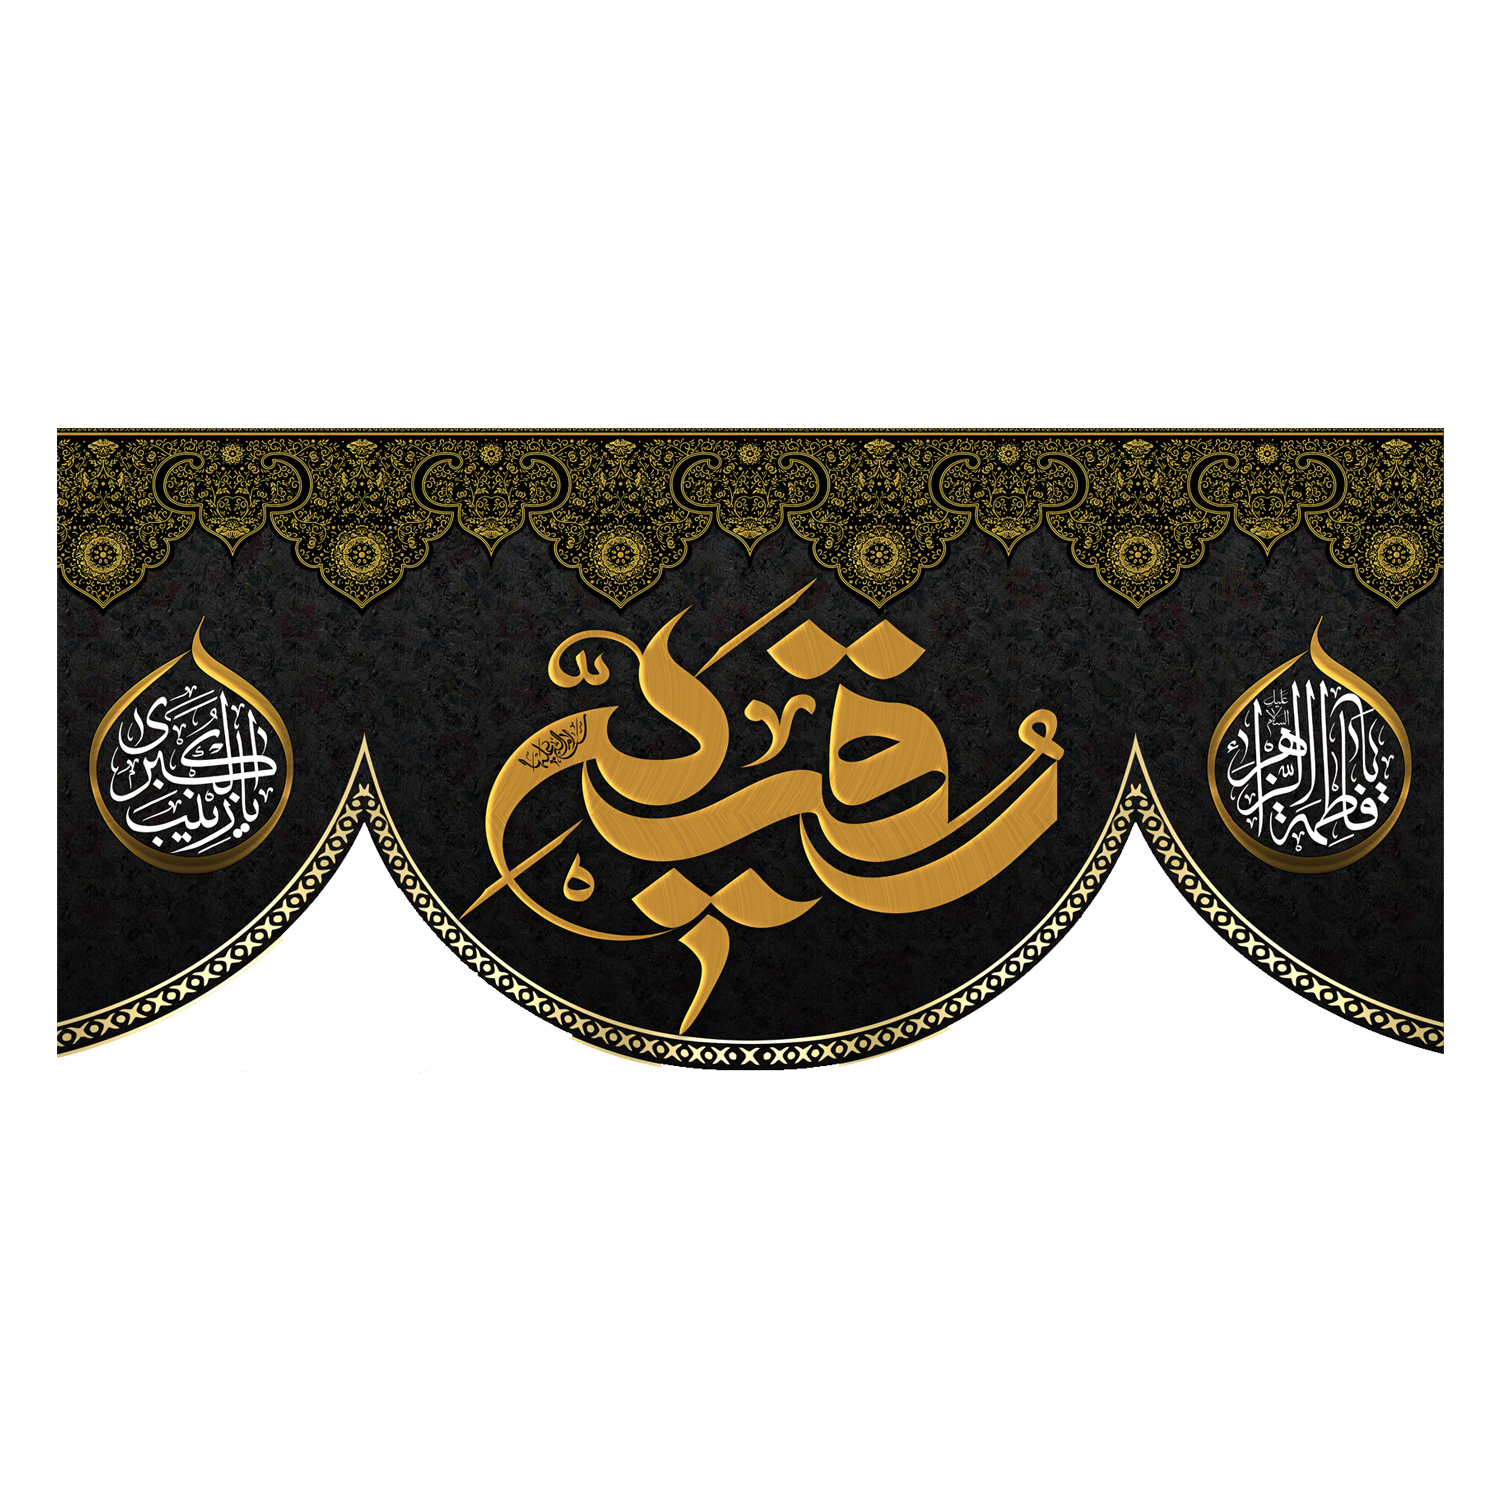 پرچم مدل حضرت رقیه (س) کد 500068-140300